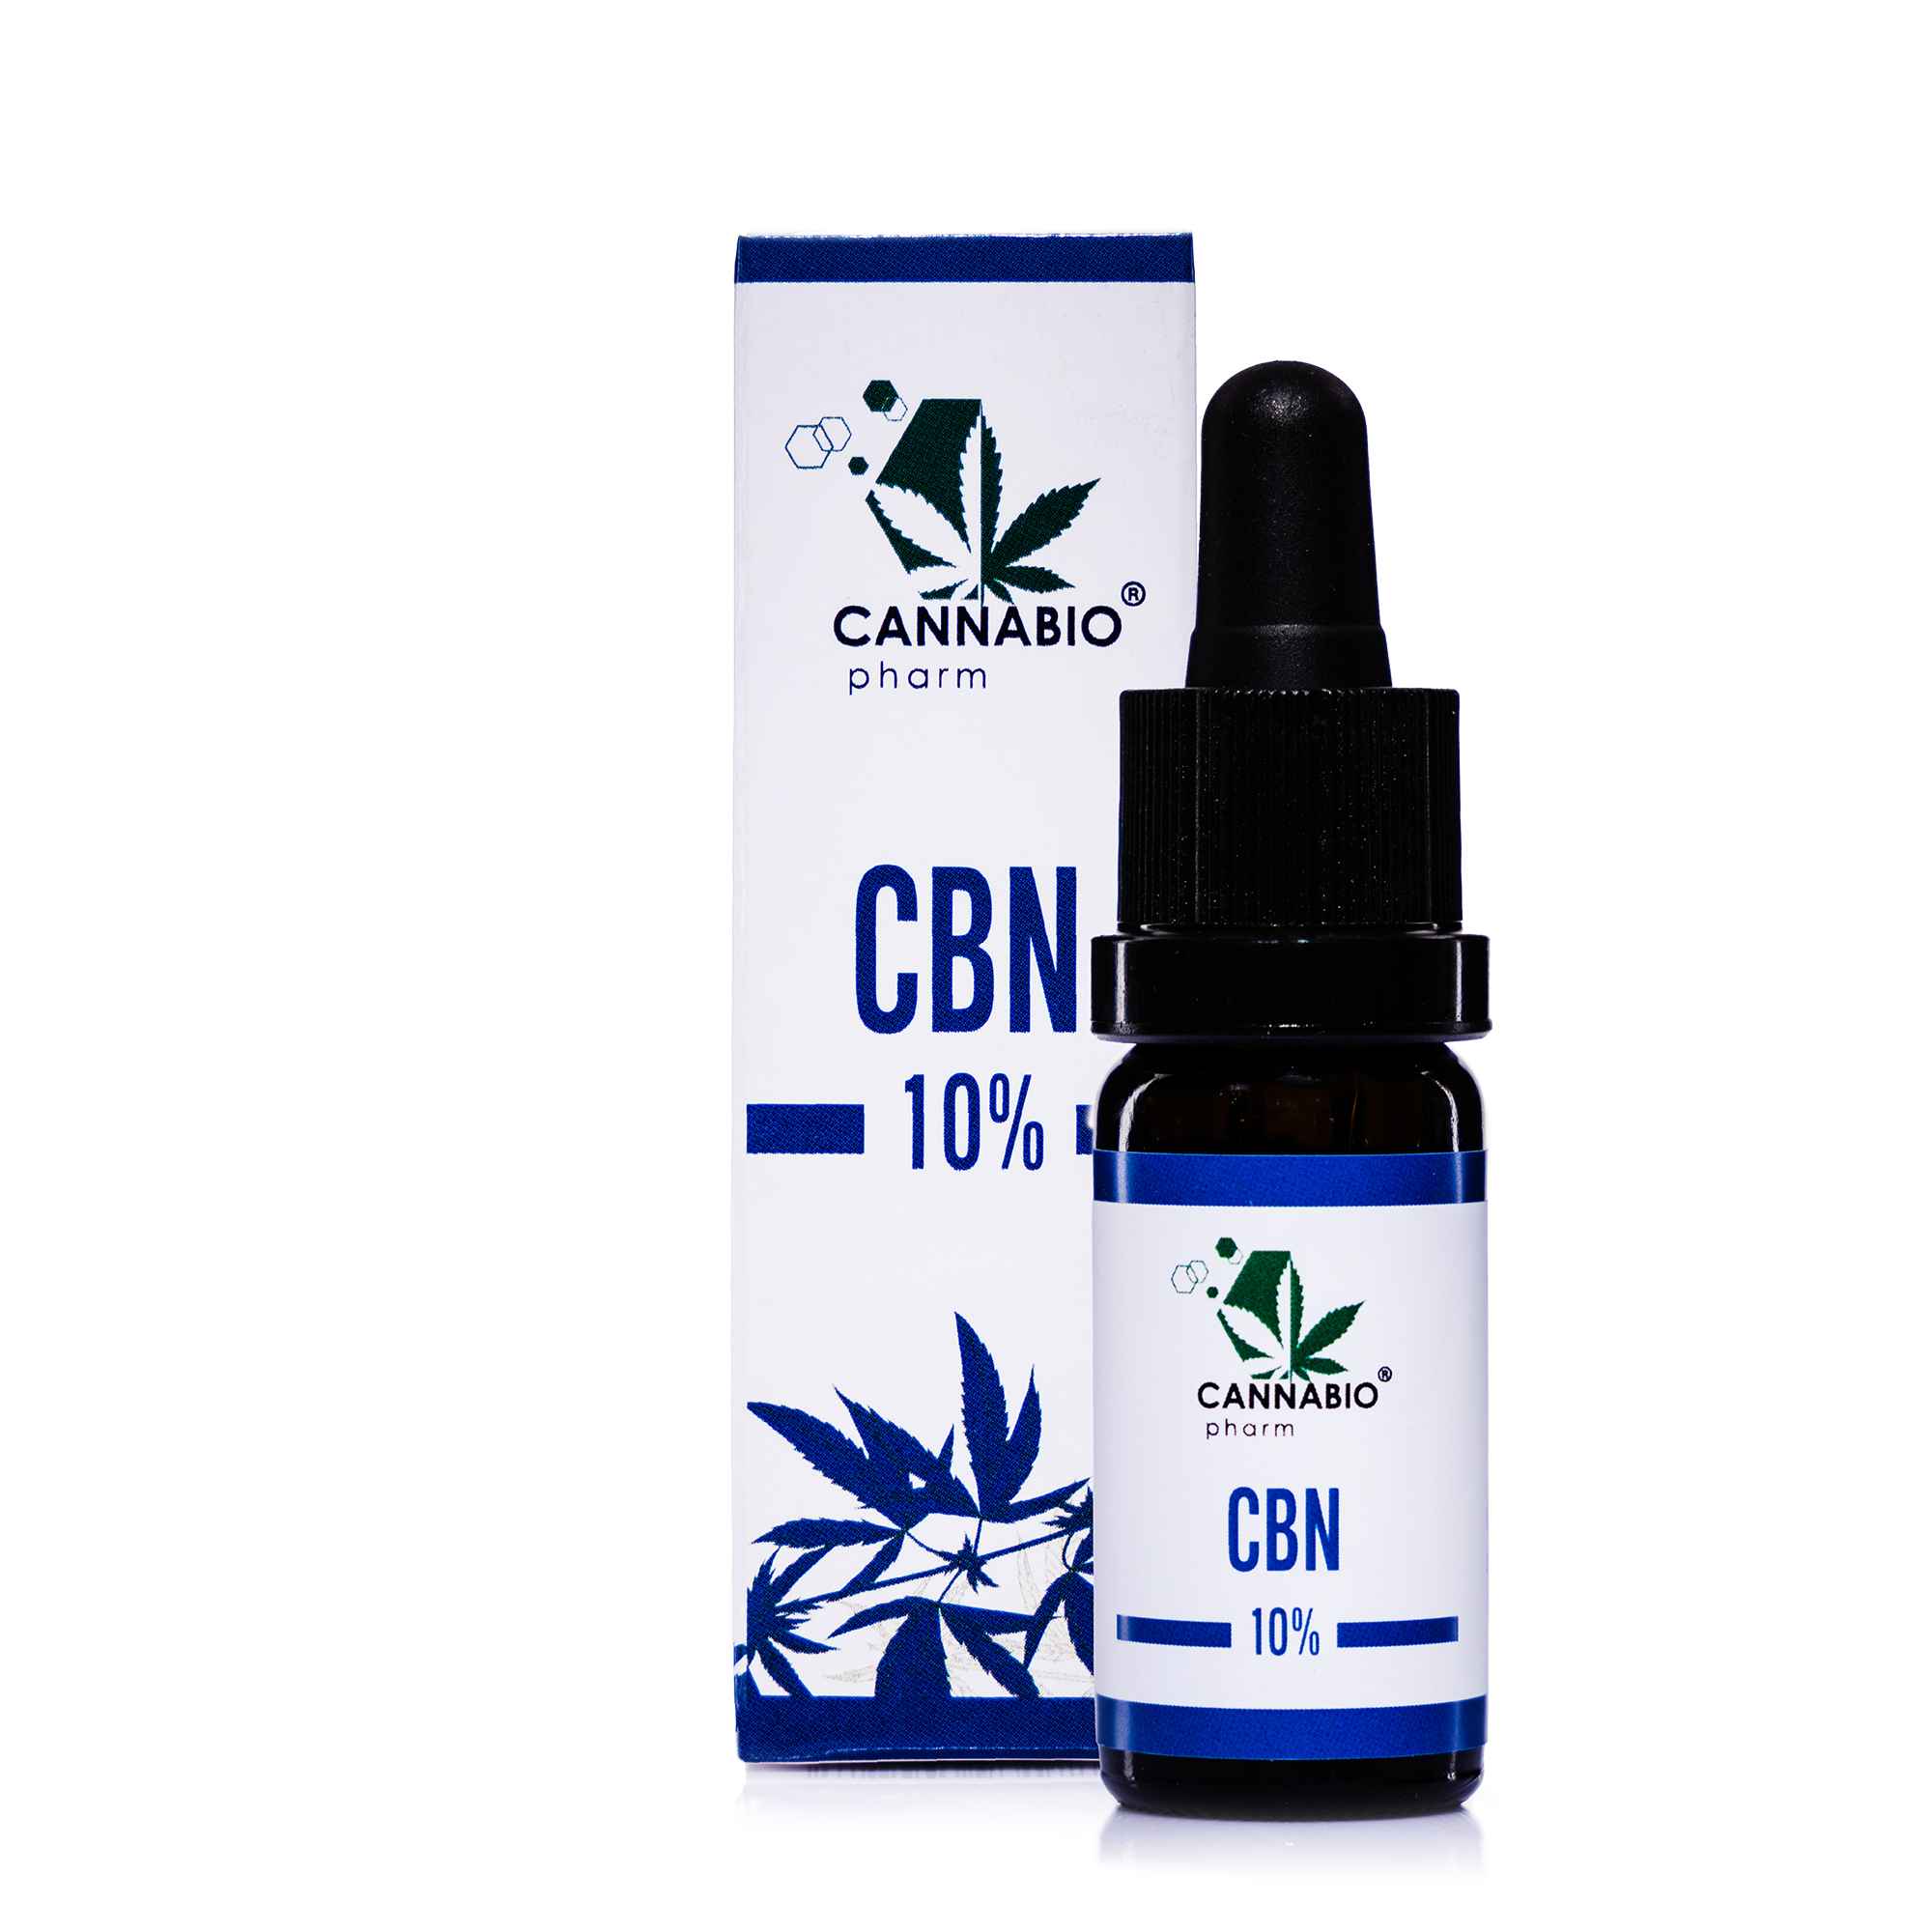 CANNABIOpharm CBN 10 percent